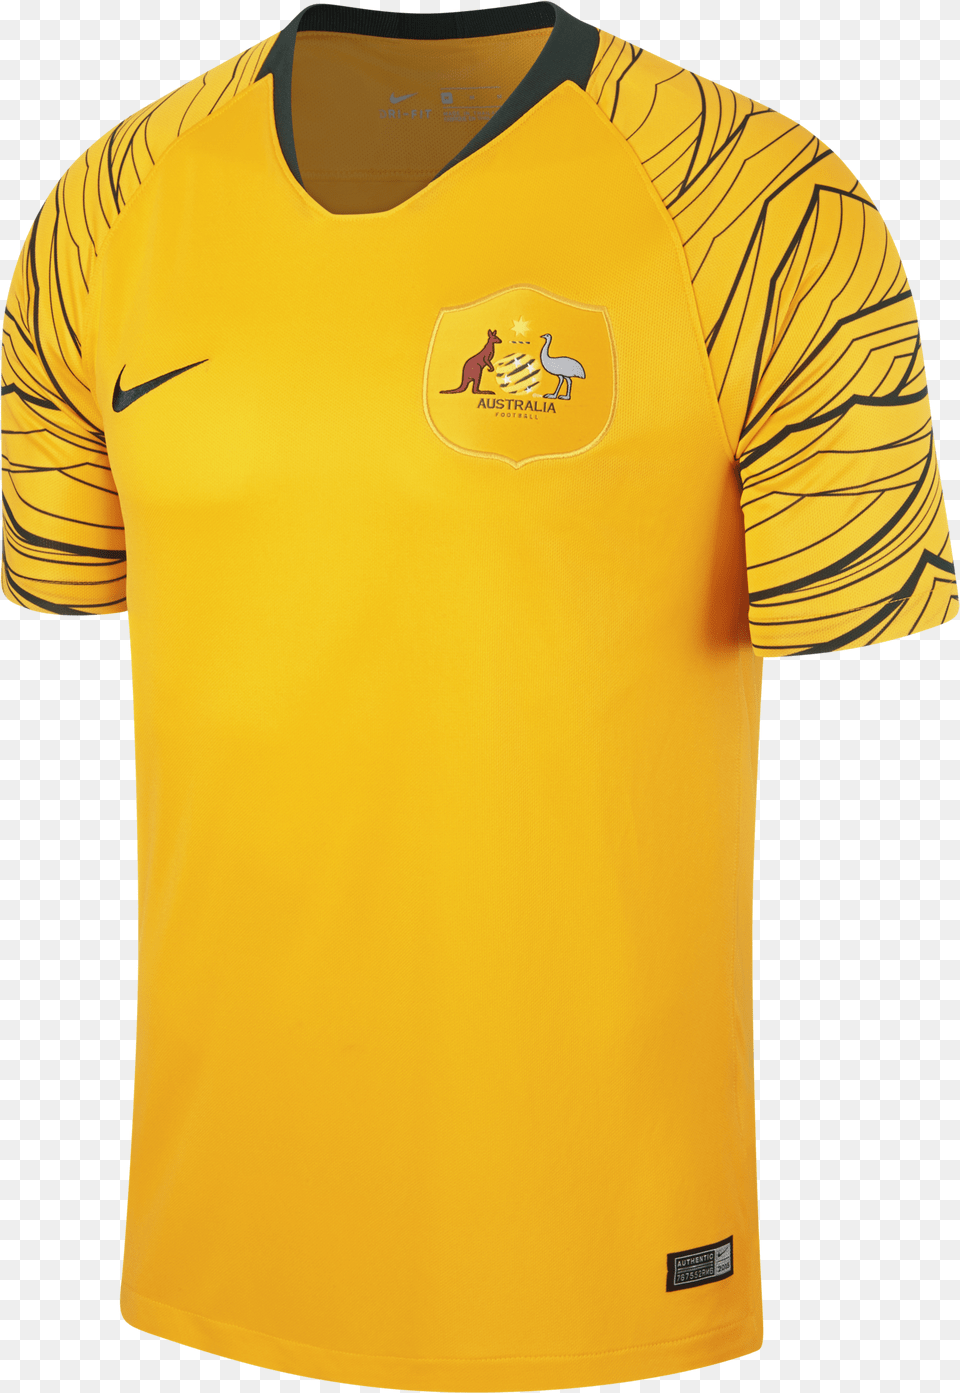 Nike Australia World Cup 2018 Stadium Home Jersey World Cup Uniforms 2018, Clothing, Shirt, T-shirt Png Image